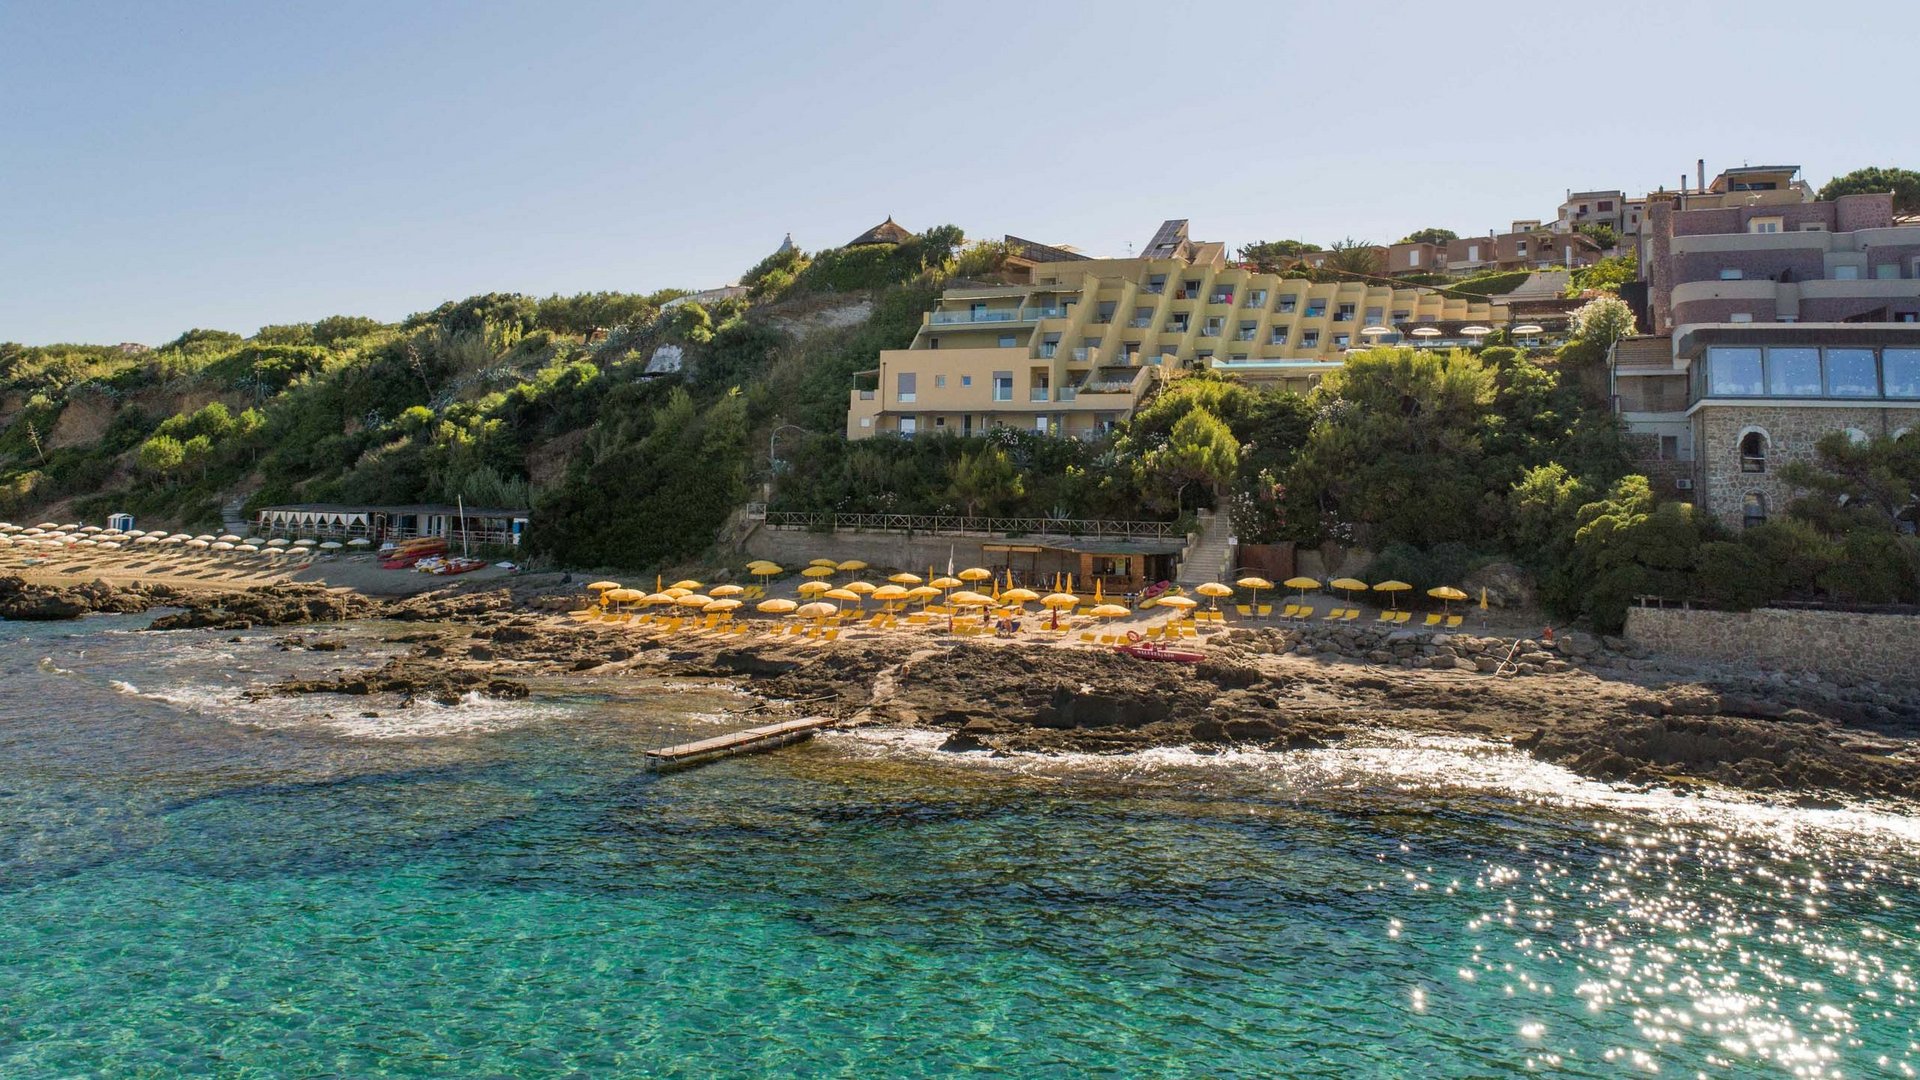 Hotel with private beach in the Cilento region